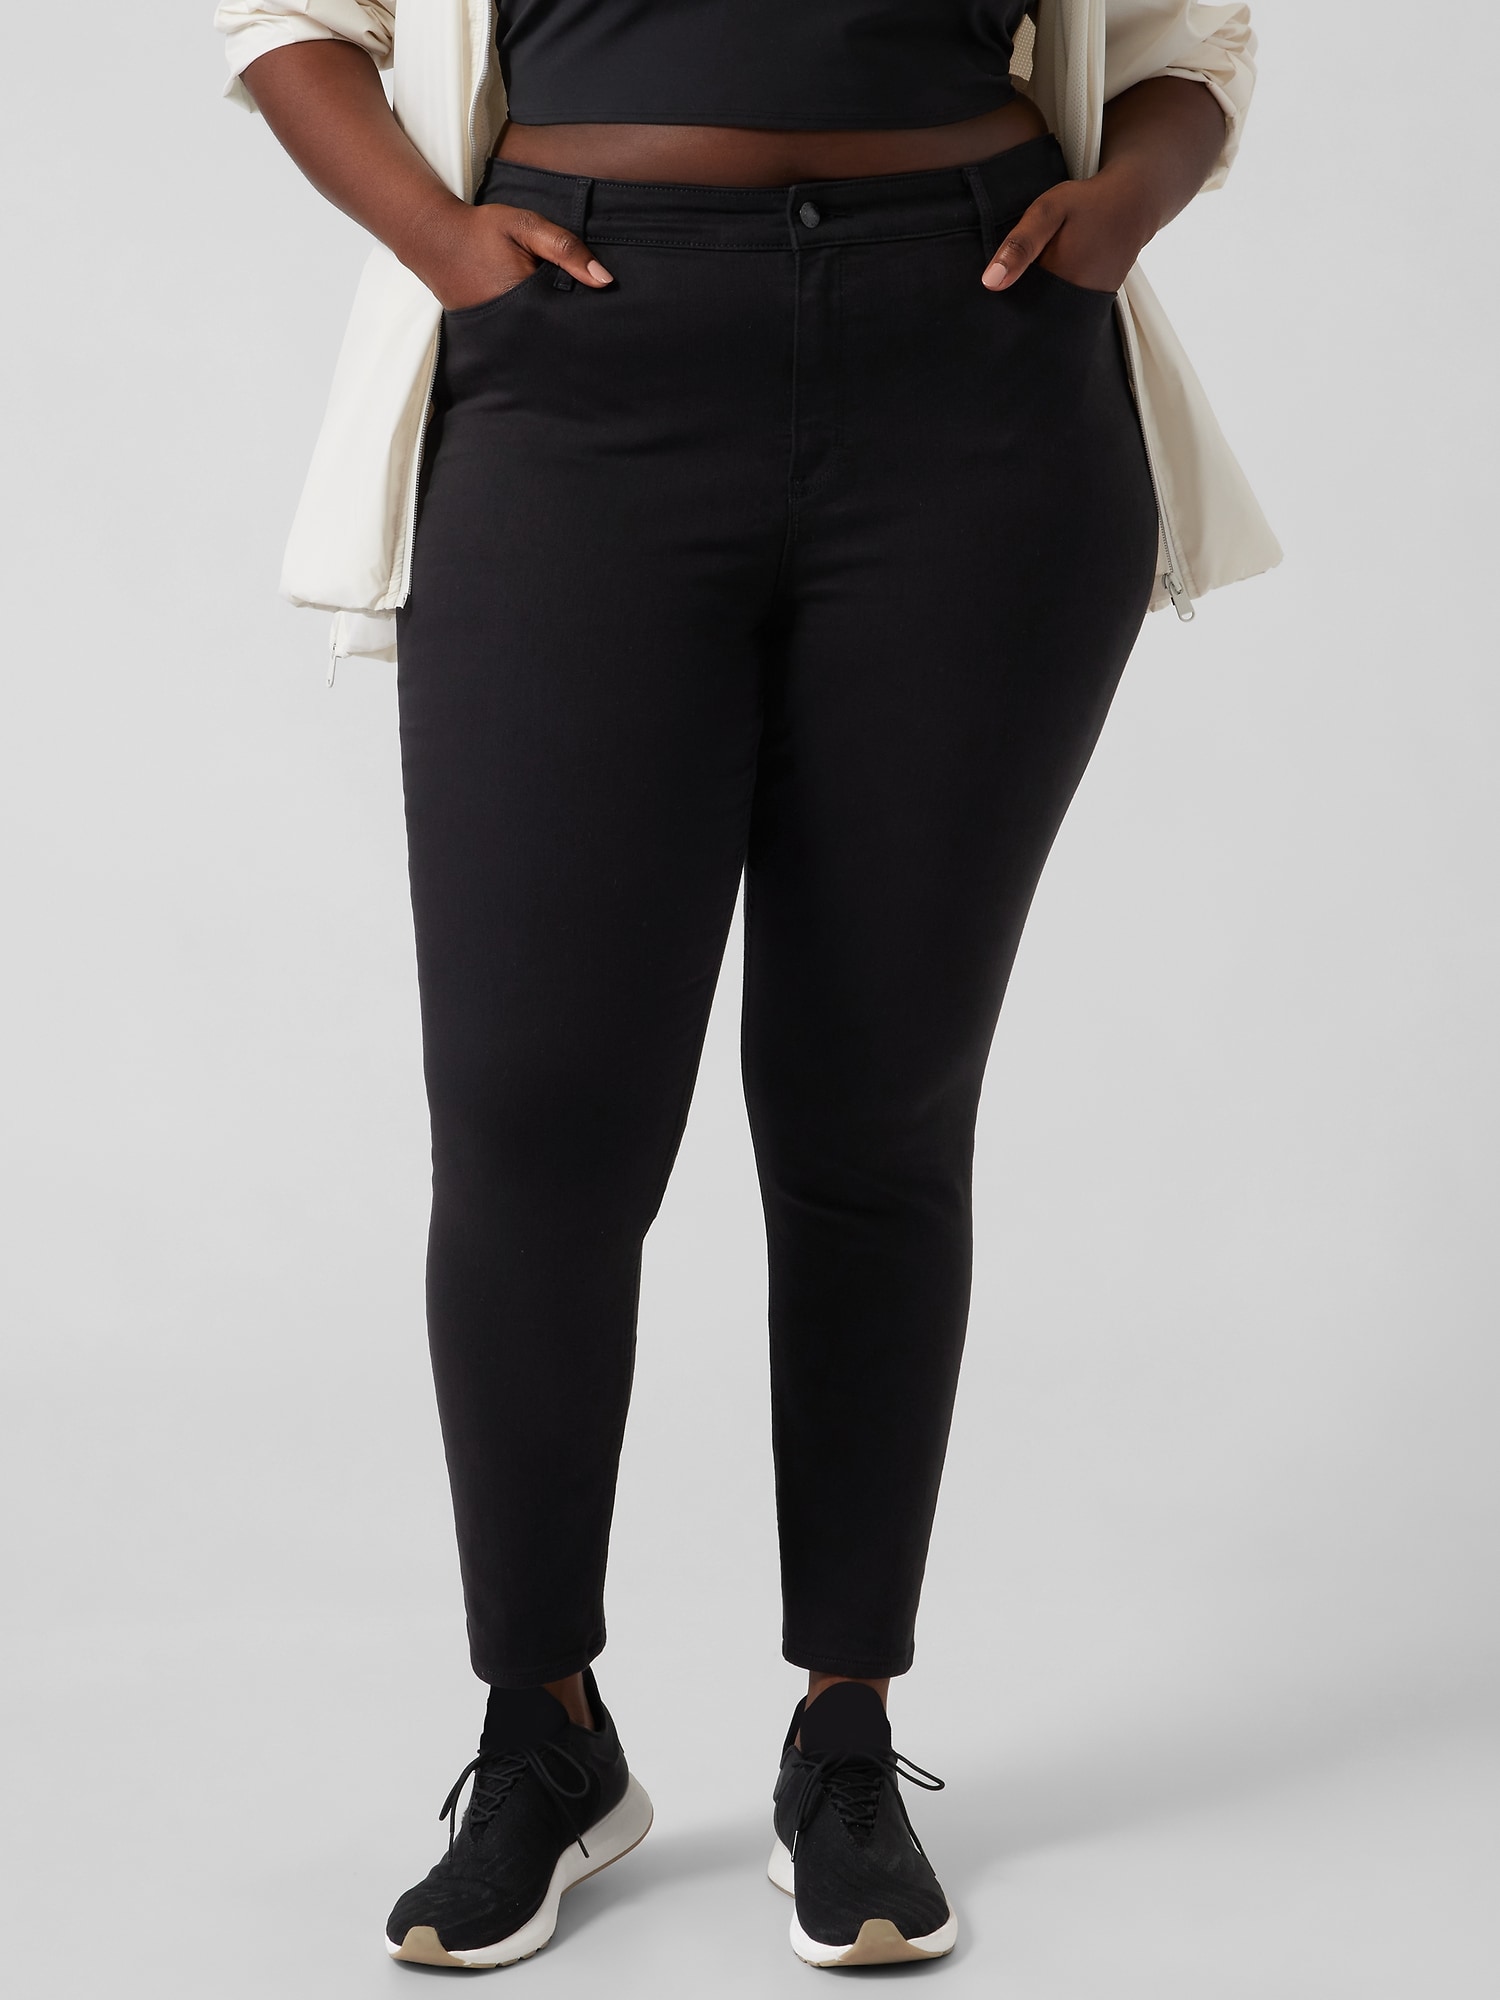 ATHLETA Frontier Denim Capri Pants Jeans Womens Size 0 Black Stretch